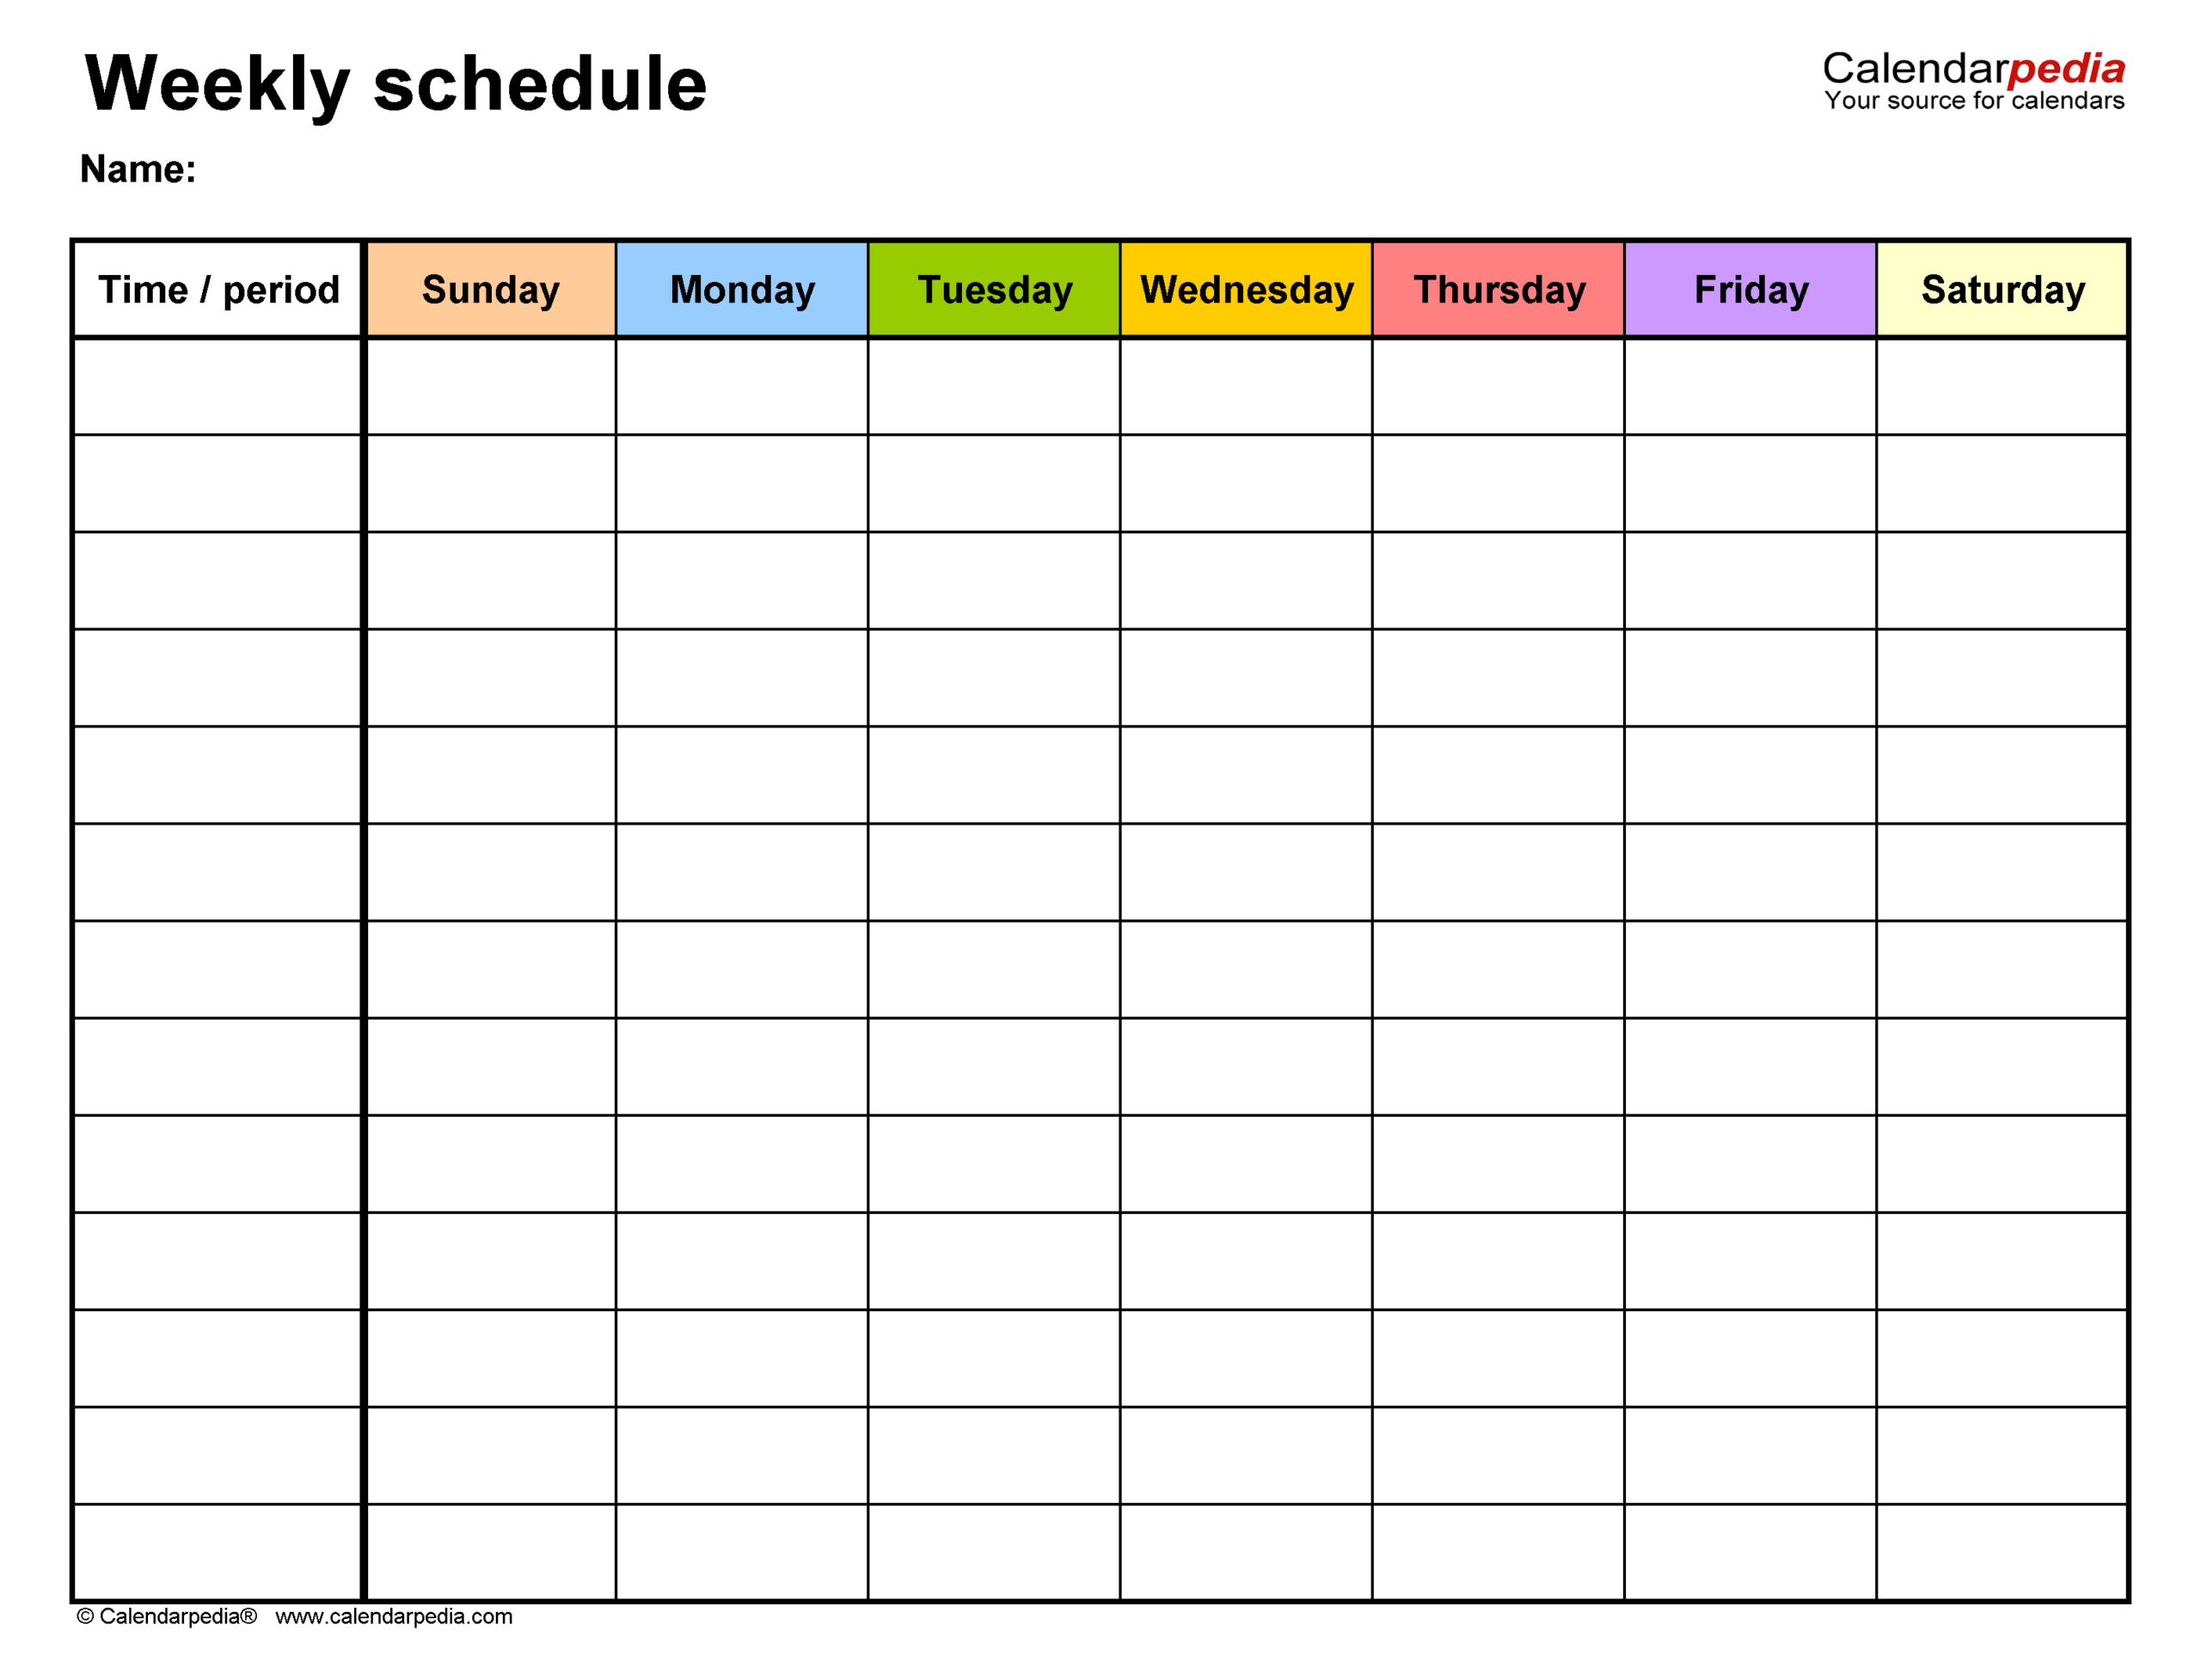 Free Printable Weekly School Schedule With Time Slots Calendar 